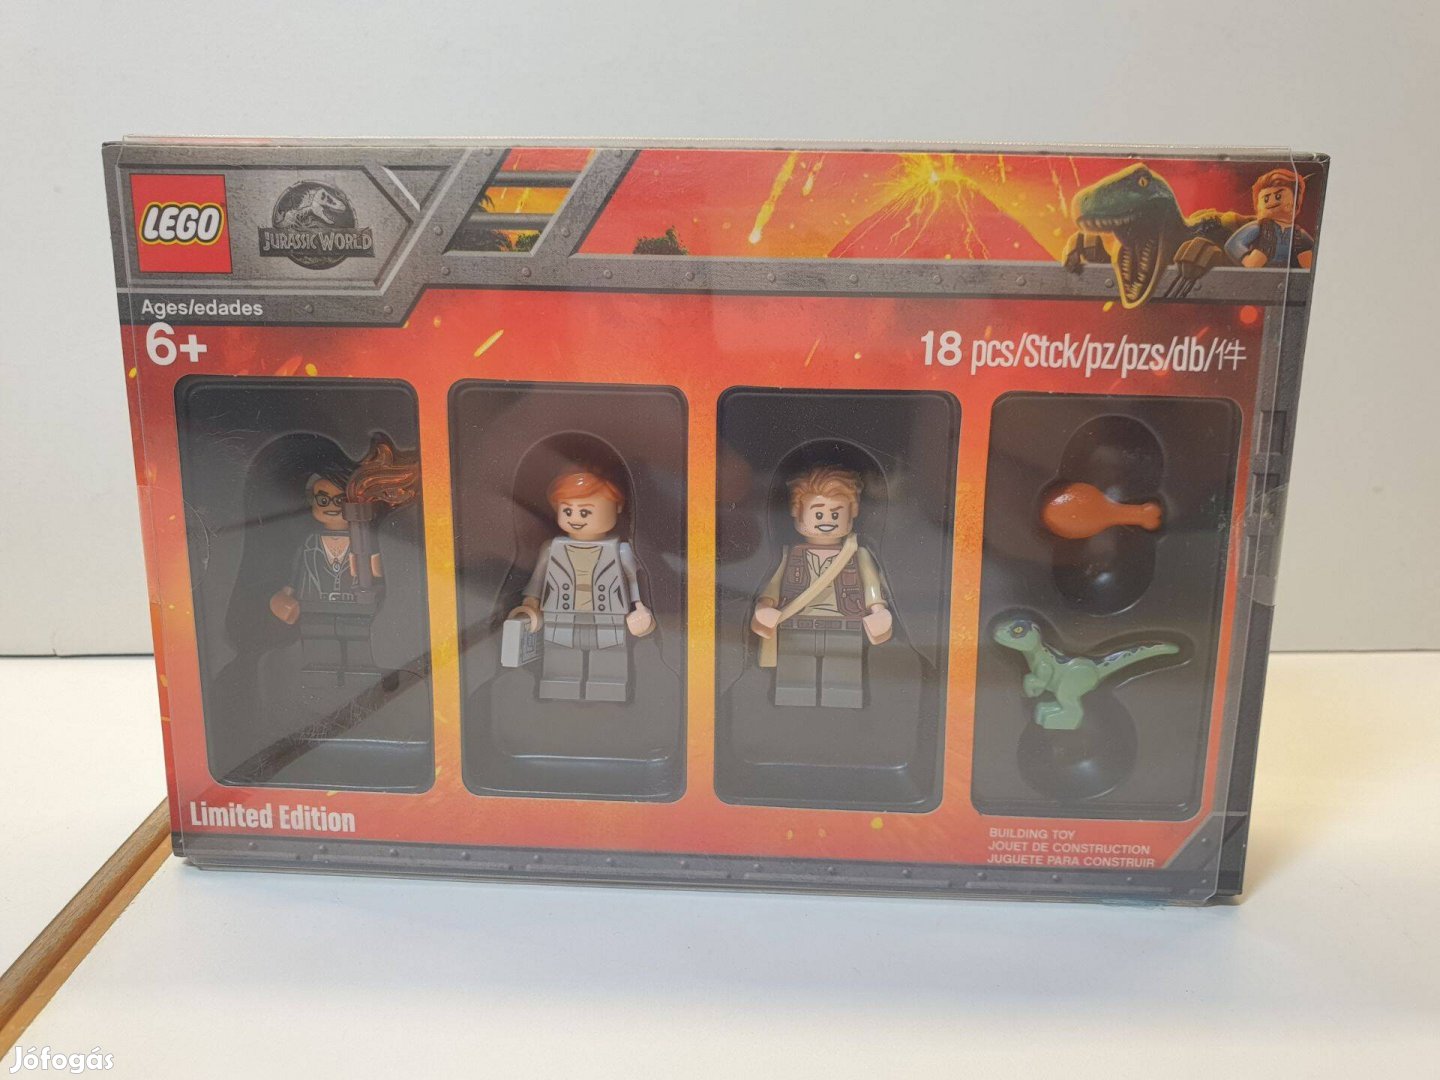 LEGO Jurassic World - 5005255 - Bricktober Minifigure Collection - Új